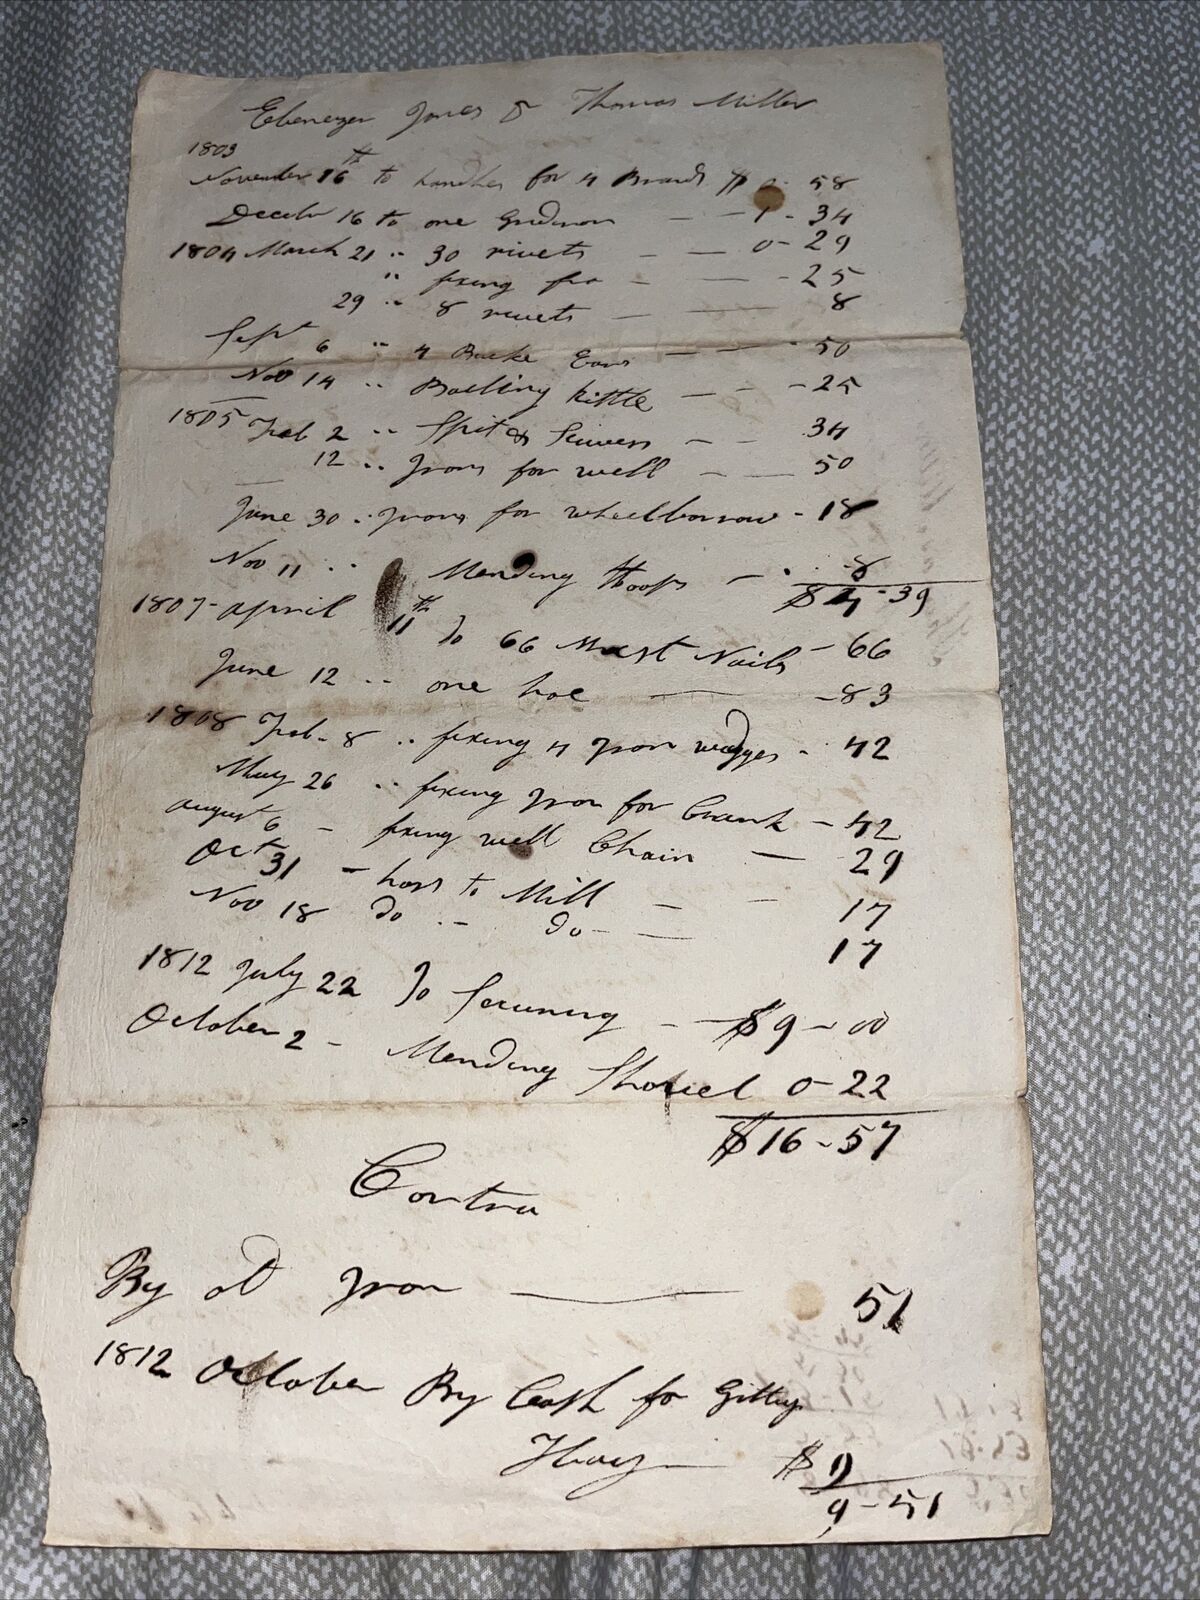 Antique 1803 - 1812 Contact / Ledger Between Ebenezer James & Thomas Miller